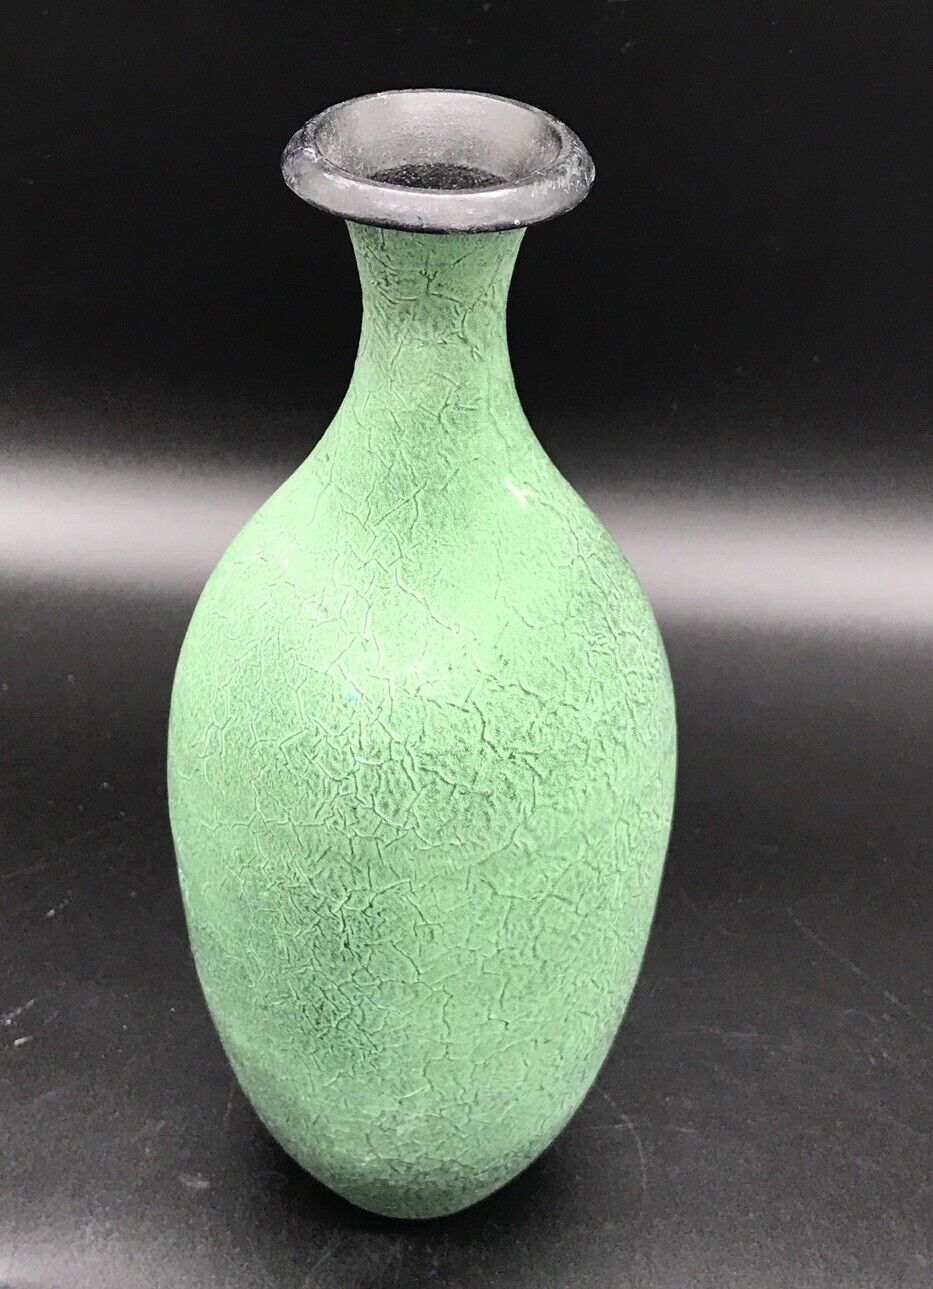 Metal Vase Green Crackle Glaze Made In India 9.5”